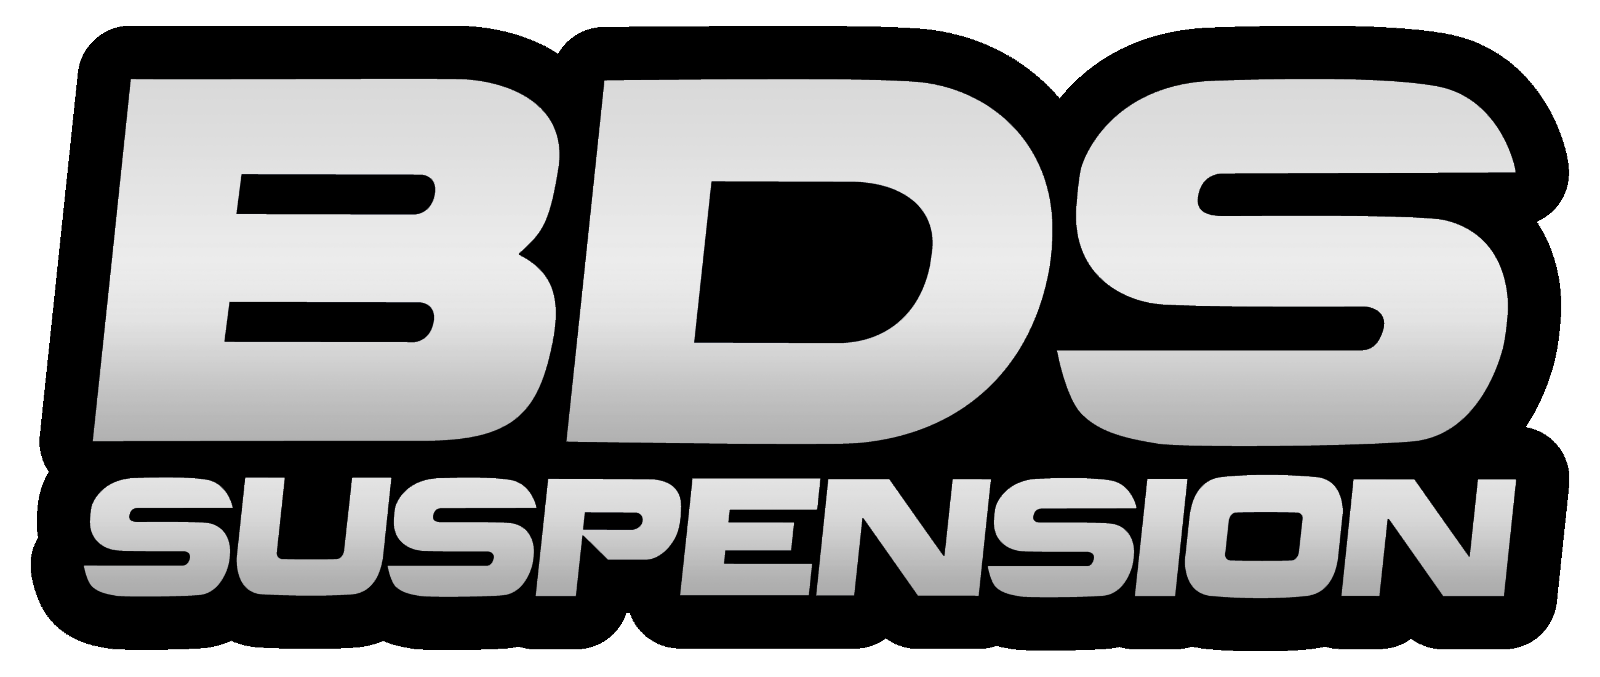 BDS BDS182FS 4.5 Inch Lift Kit - Chevy Silverado or GMC Sierra 1500 (99-06) 4WD